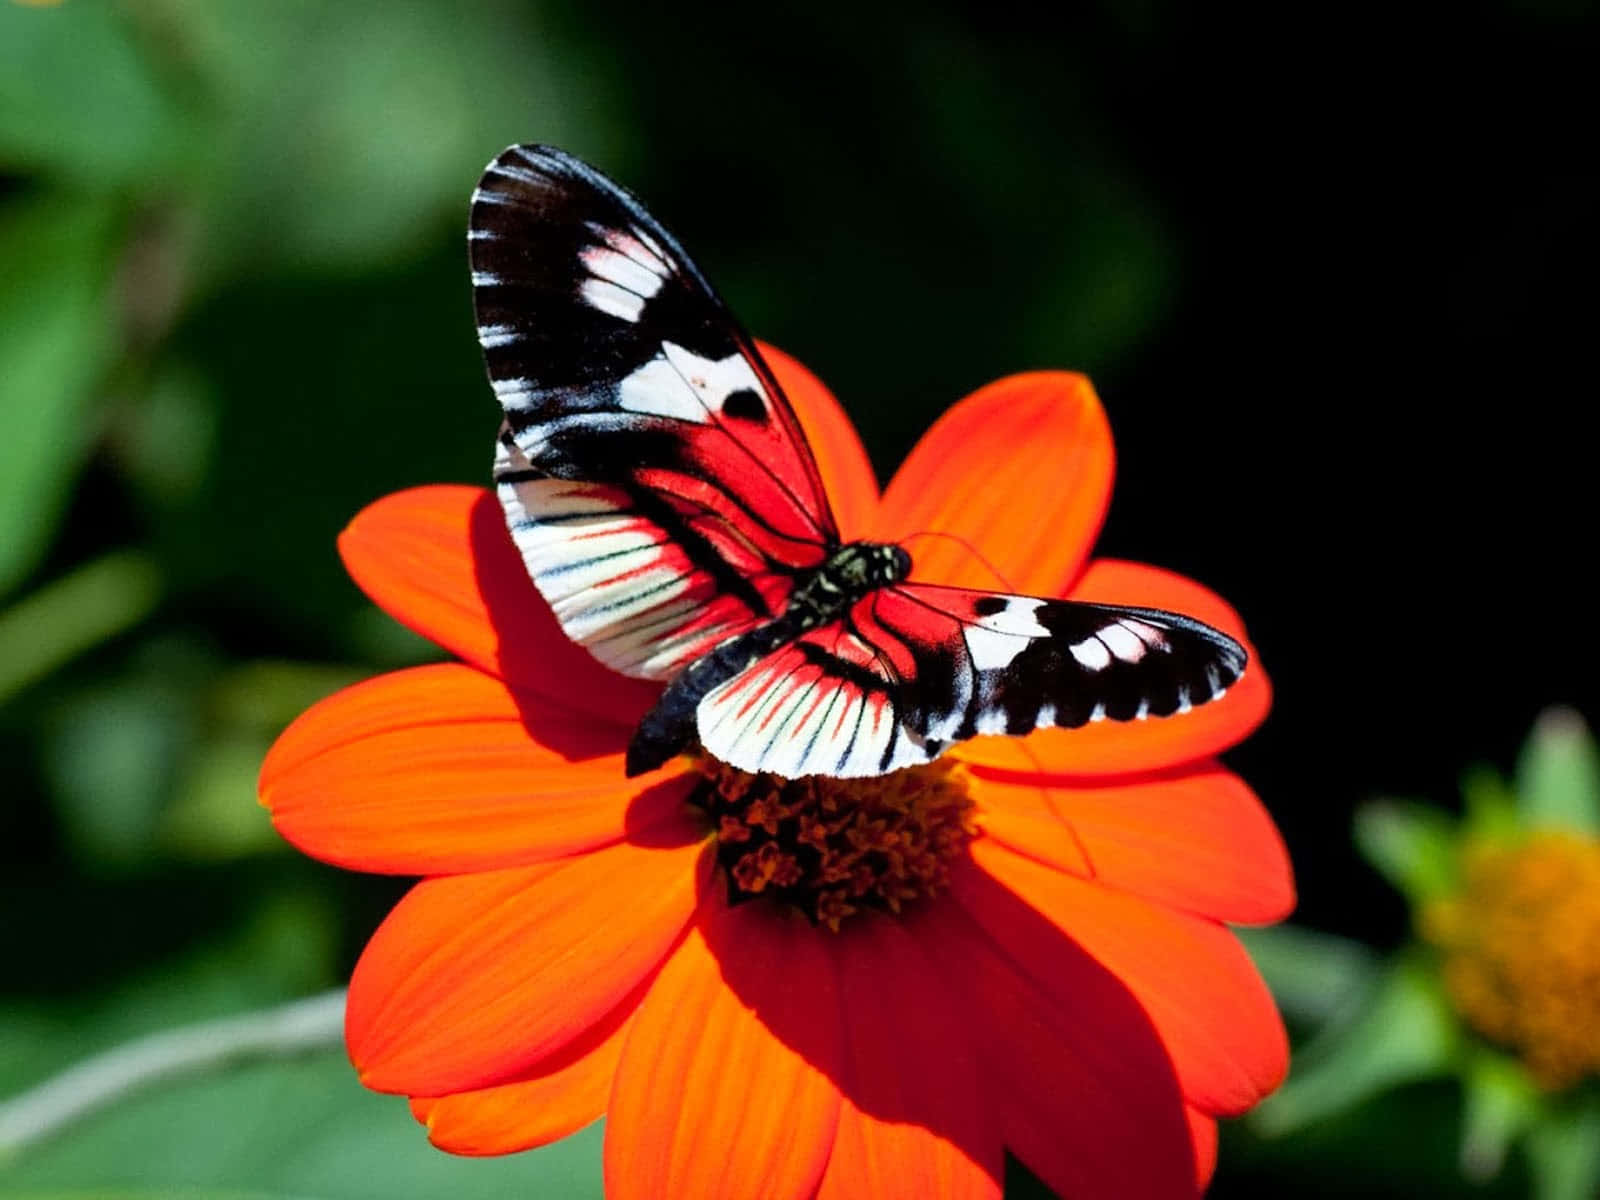 "A Majestic Monarch Butterfly Spreads Its Ornate Wings" Wallpaper